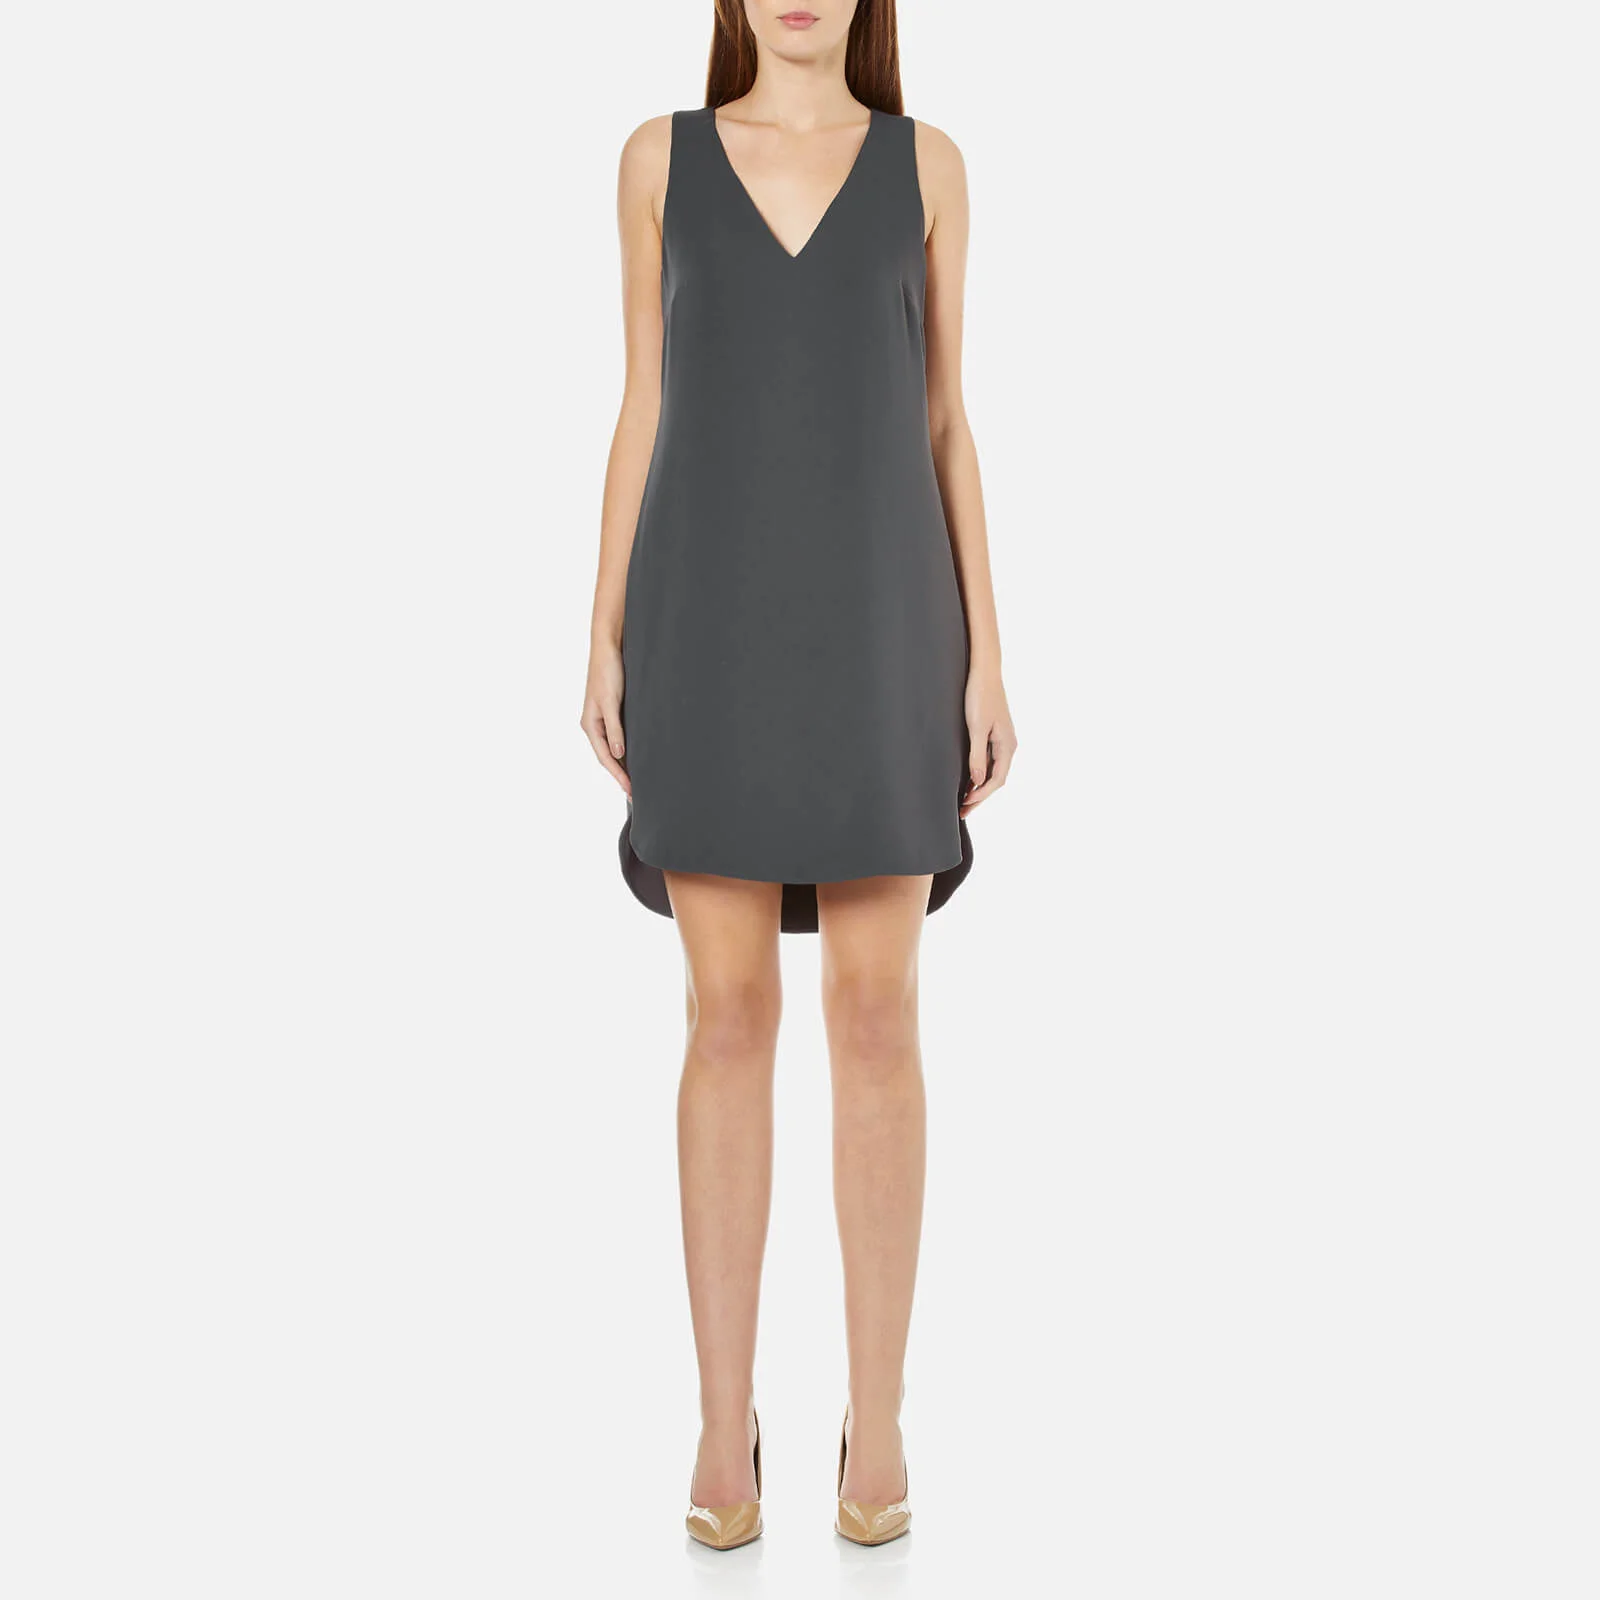 Polo Ralph Lauren Women's Sleeveless Dress - Carbon Graphite Image 1